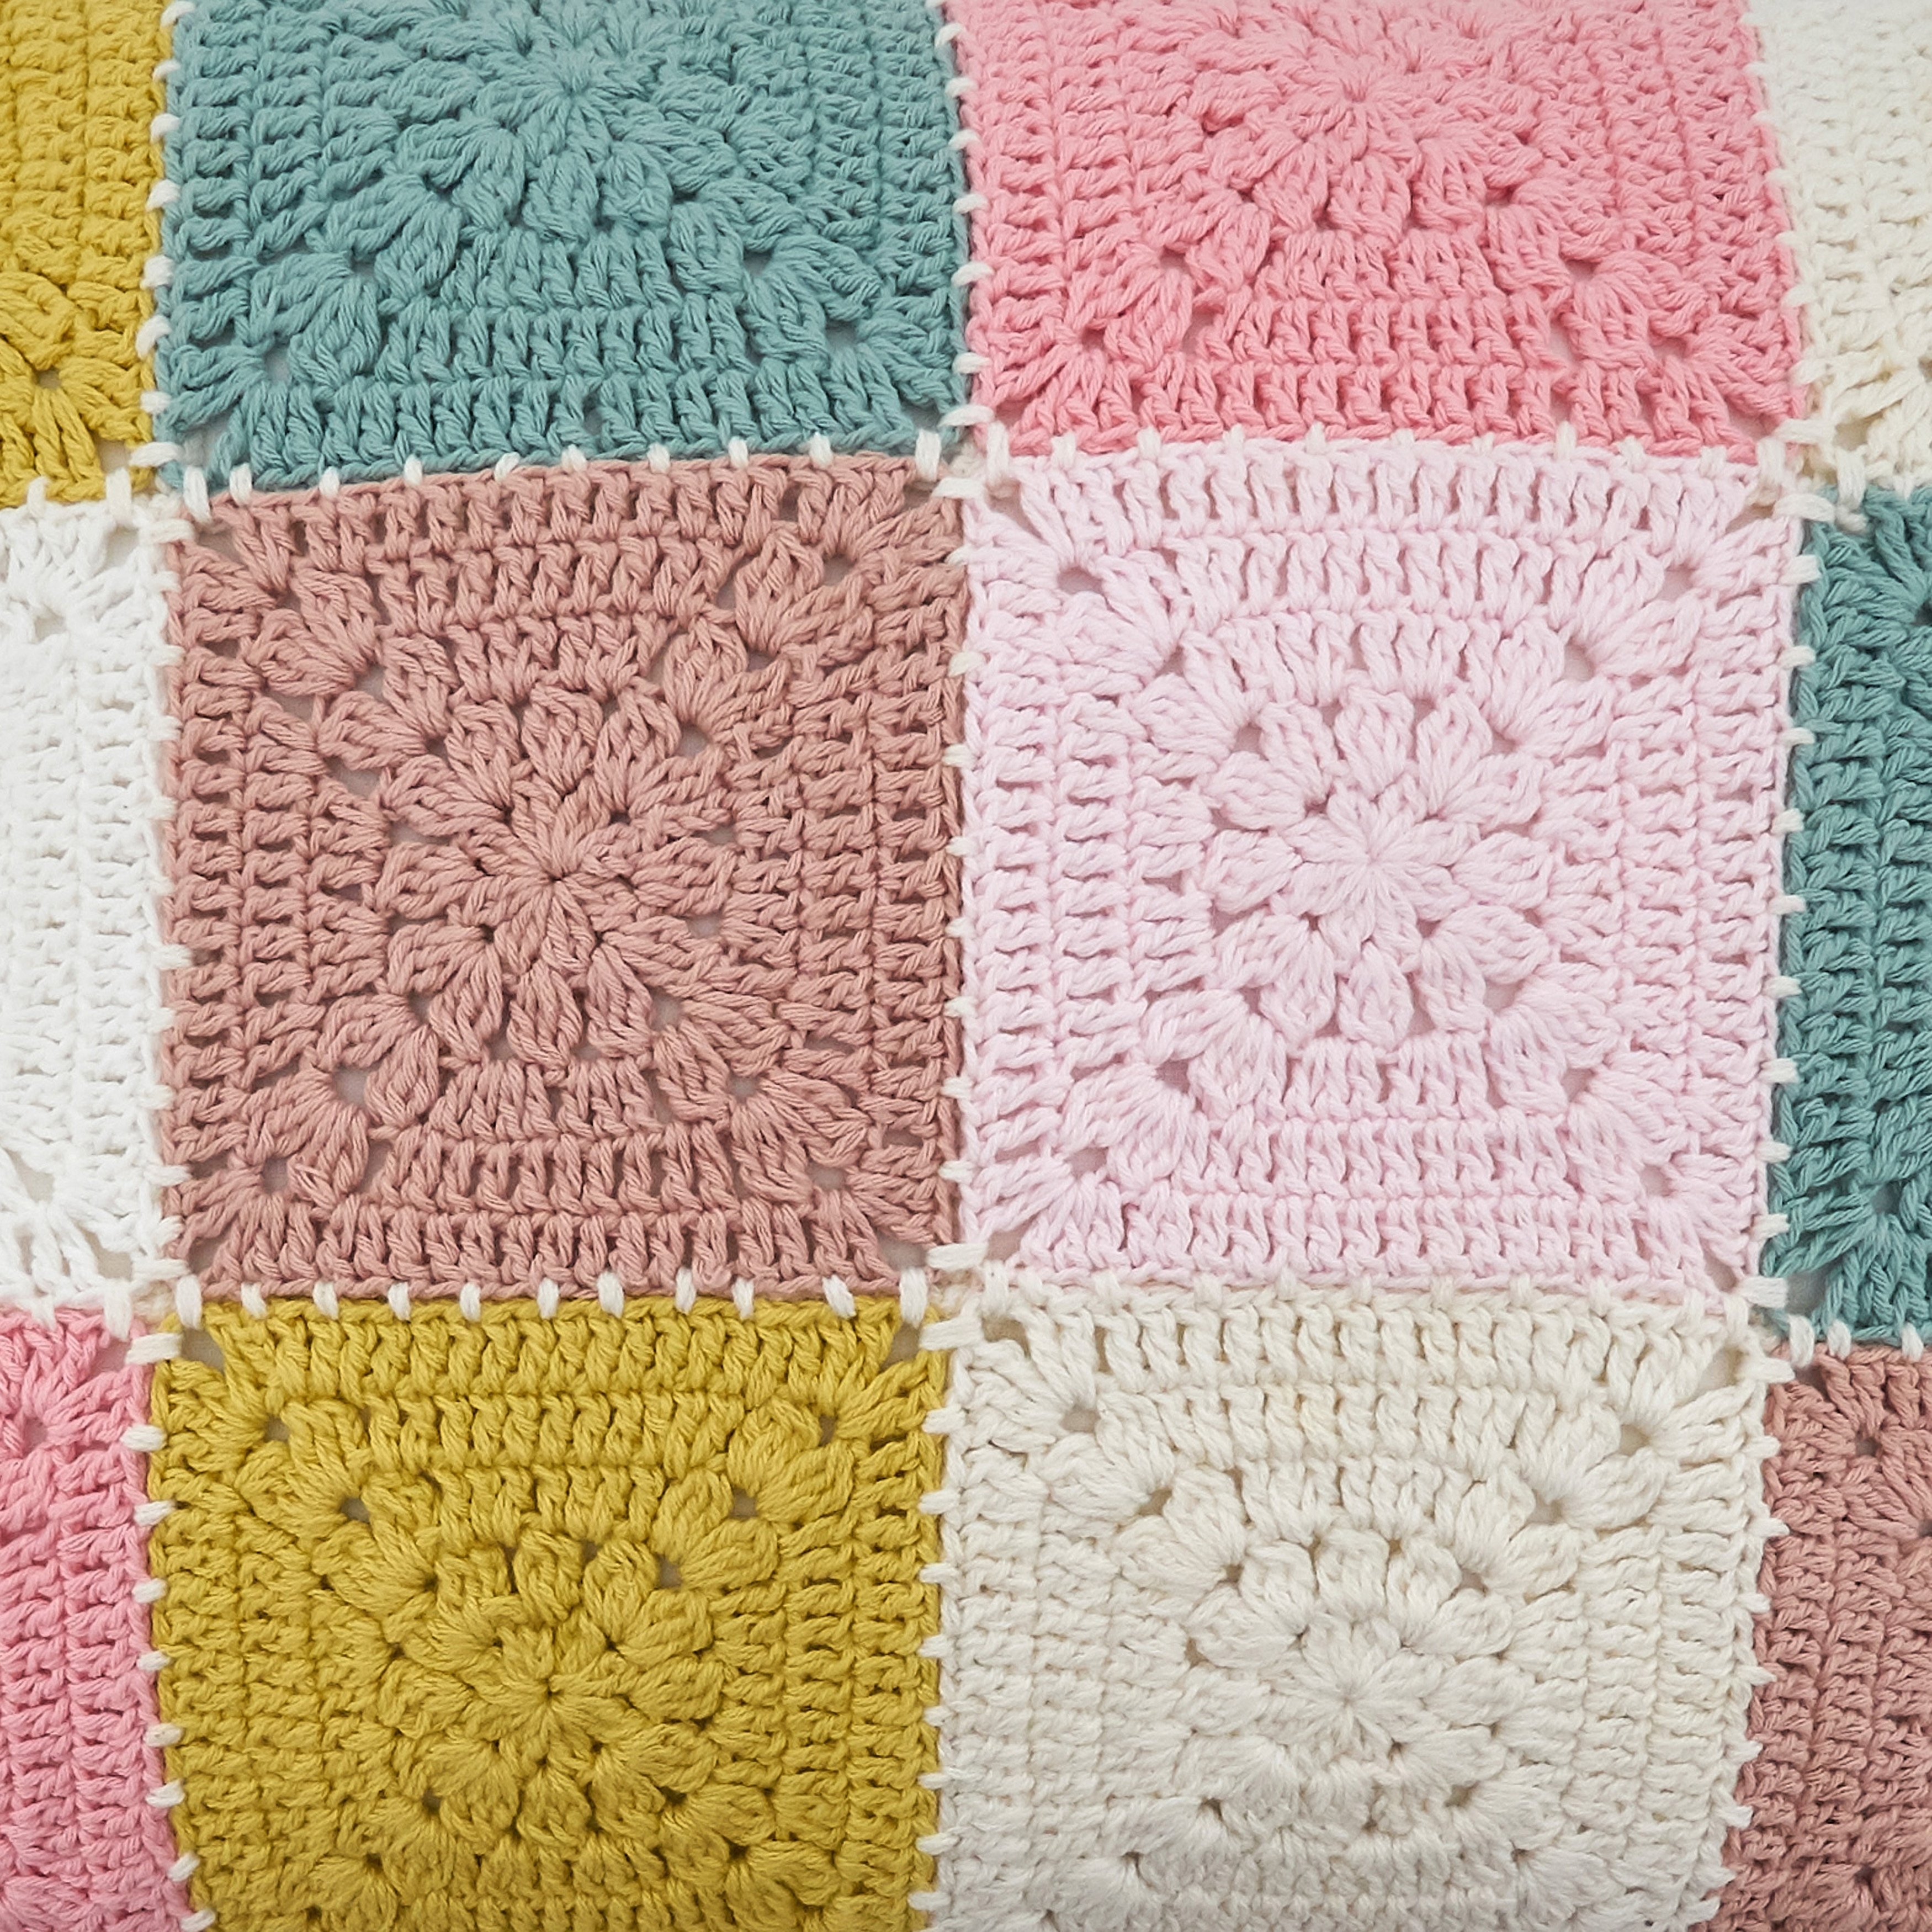 Throw Pillow With Crochet Design